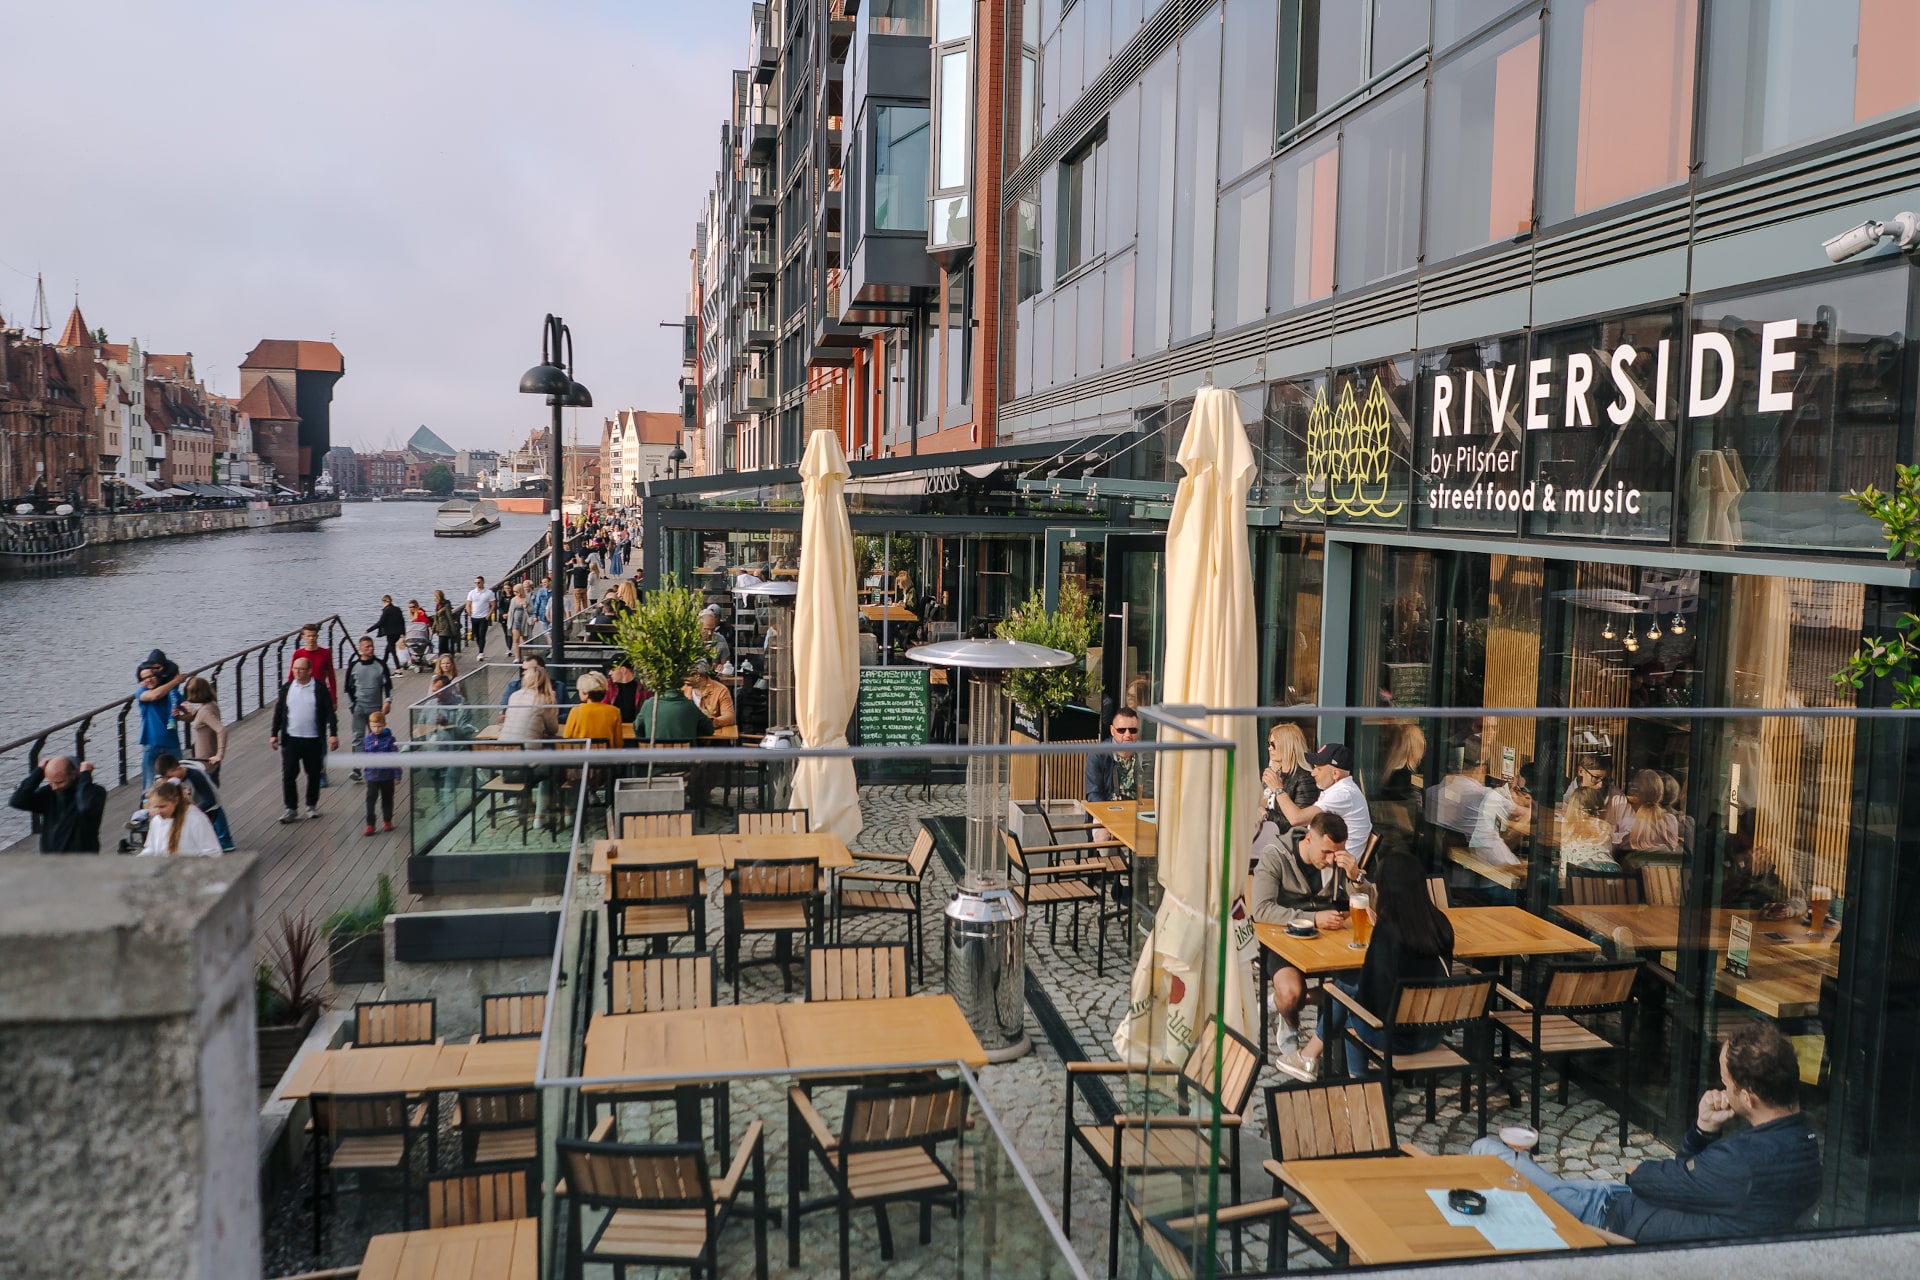 . Riverside by Pilsner <br> street food & music